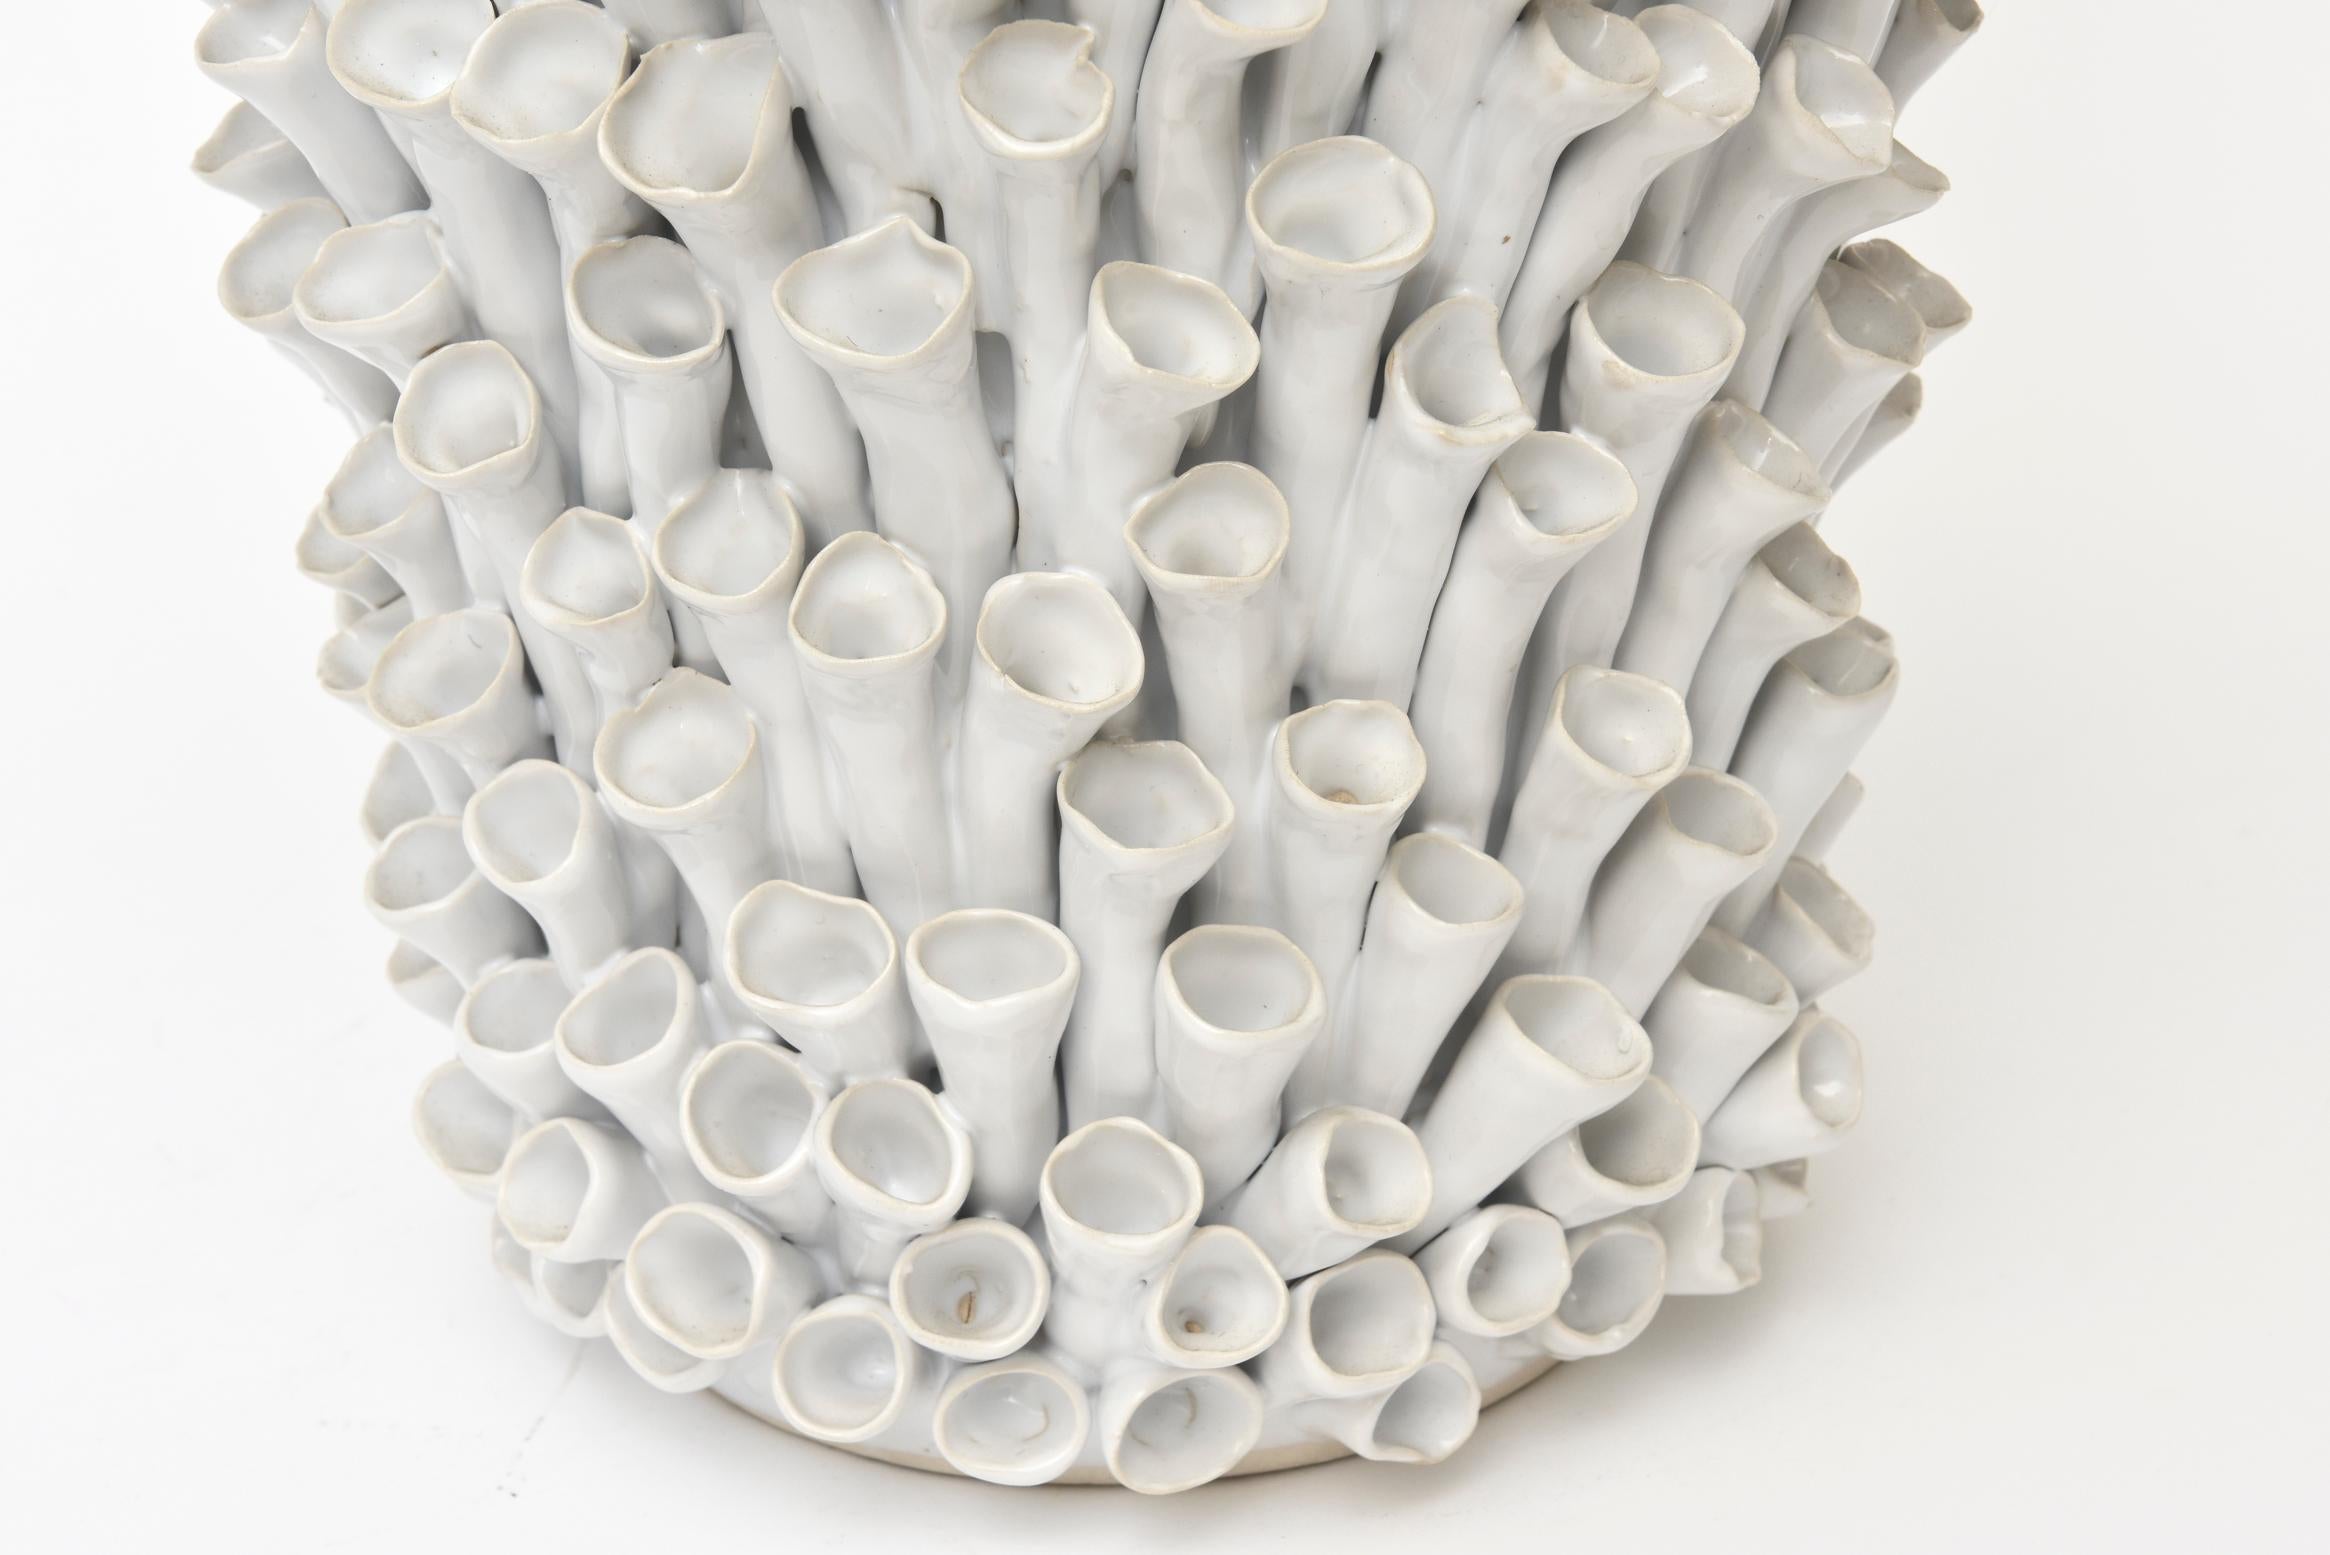 Late 20th Century Organic Modern Sculptural White Ceramic Sculpture/ Vase/ Vessel